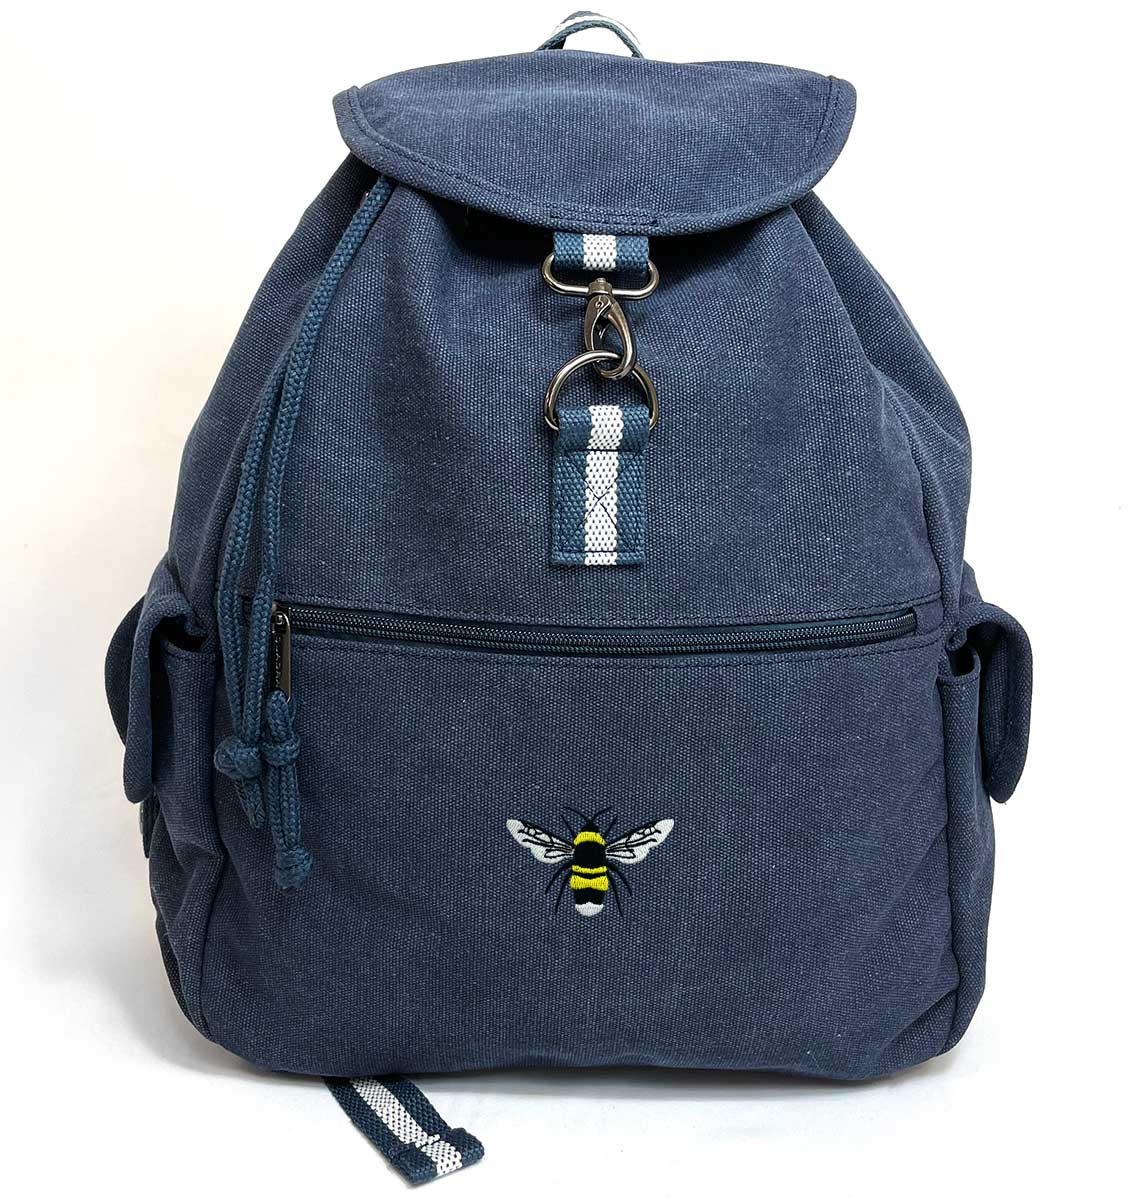 Bumble Bee Vintage Canvas Backpack - Blue Panda